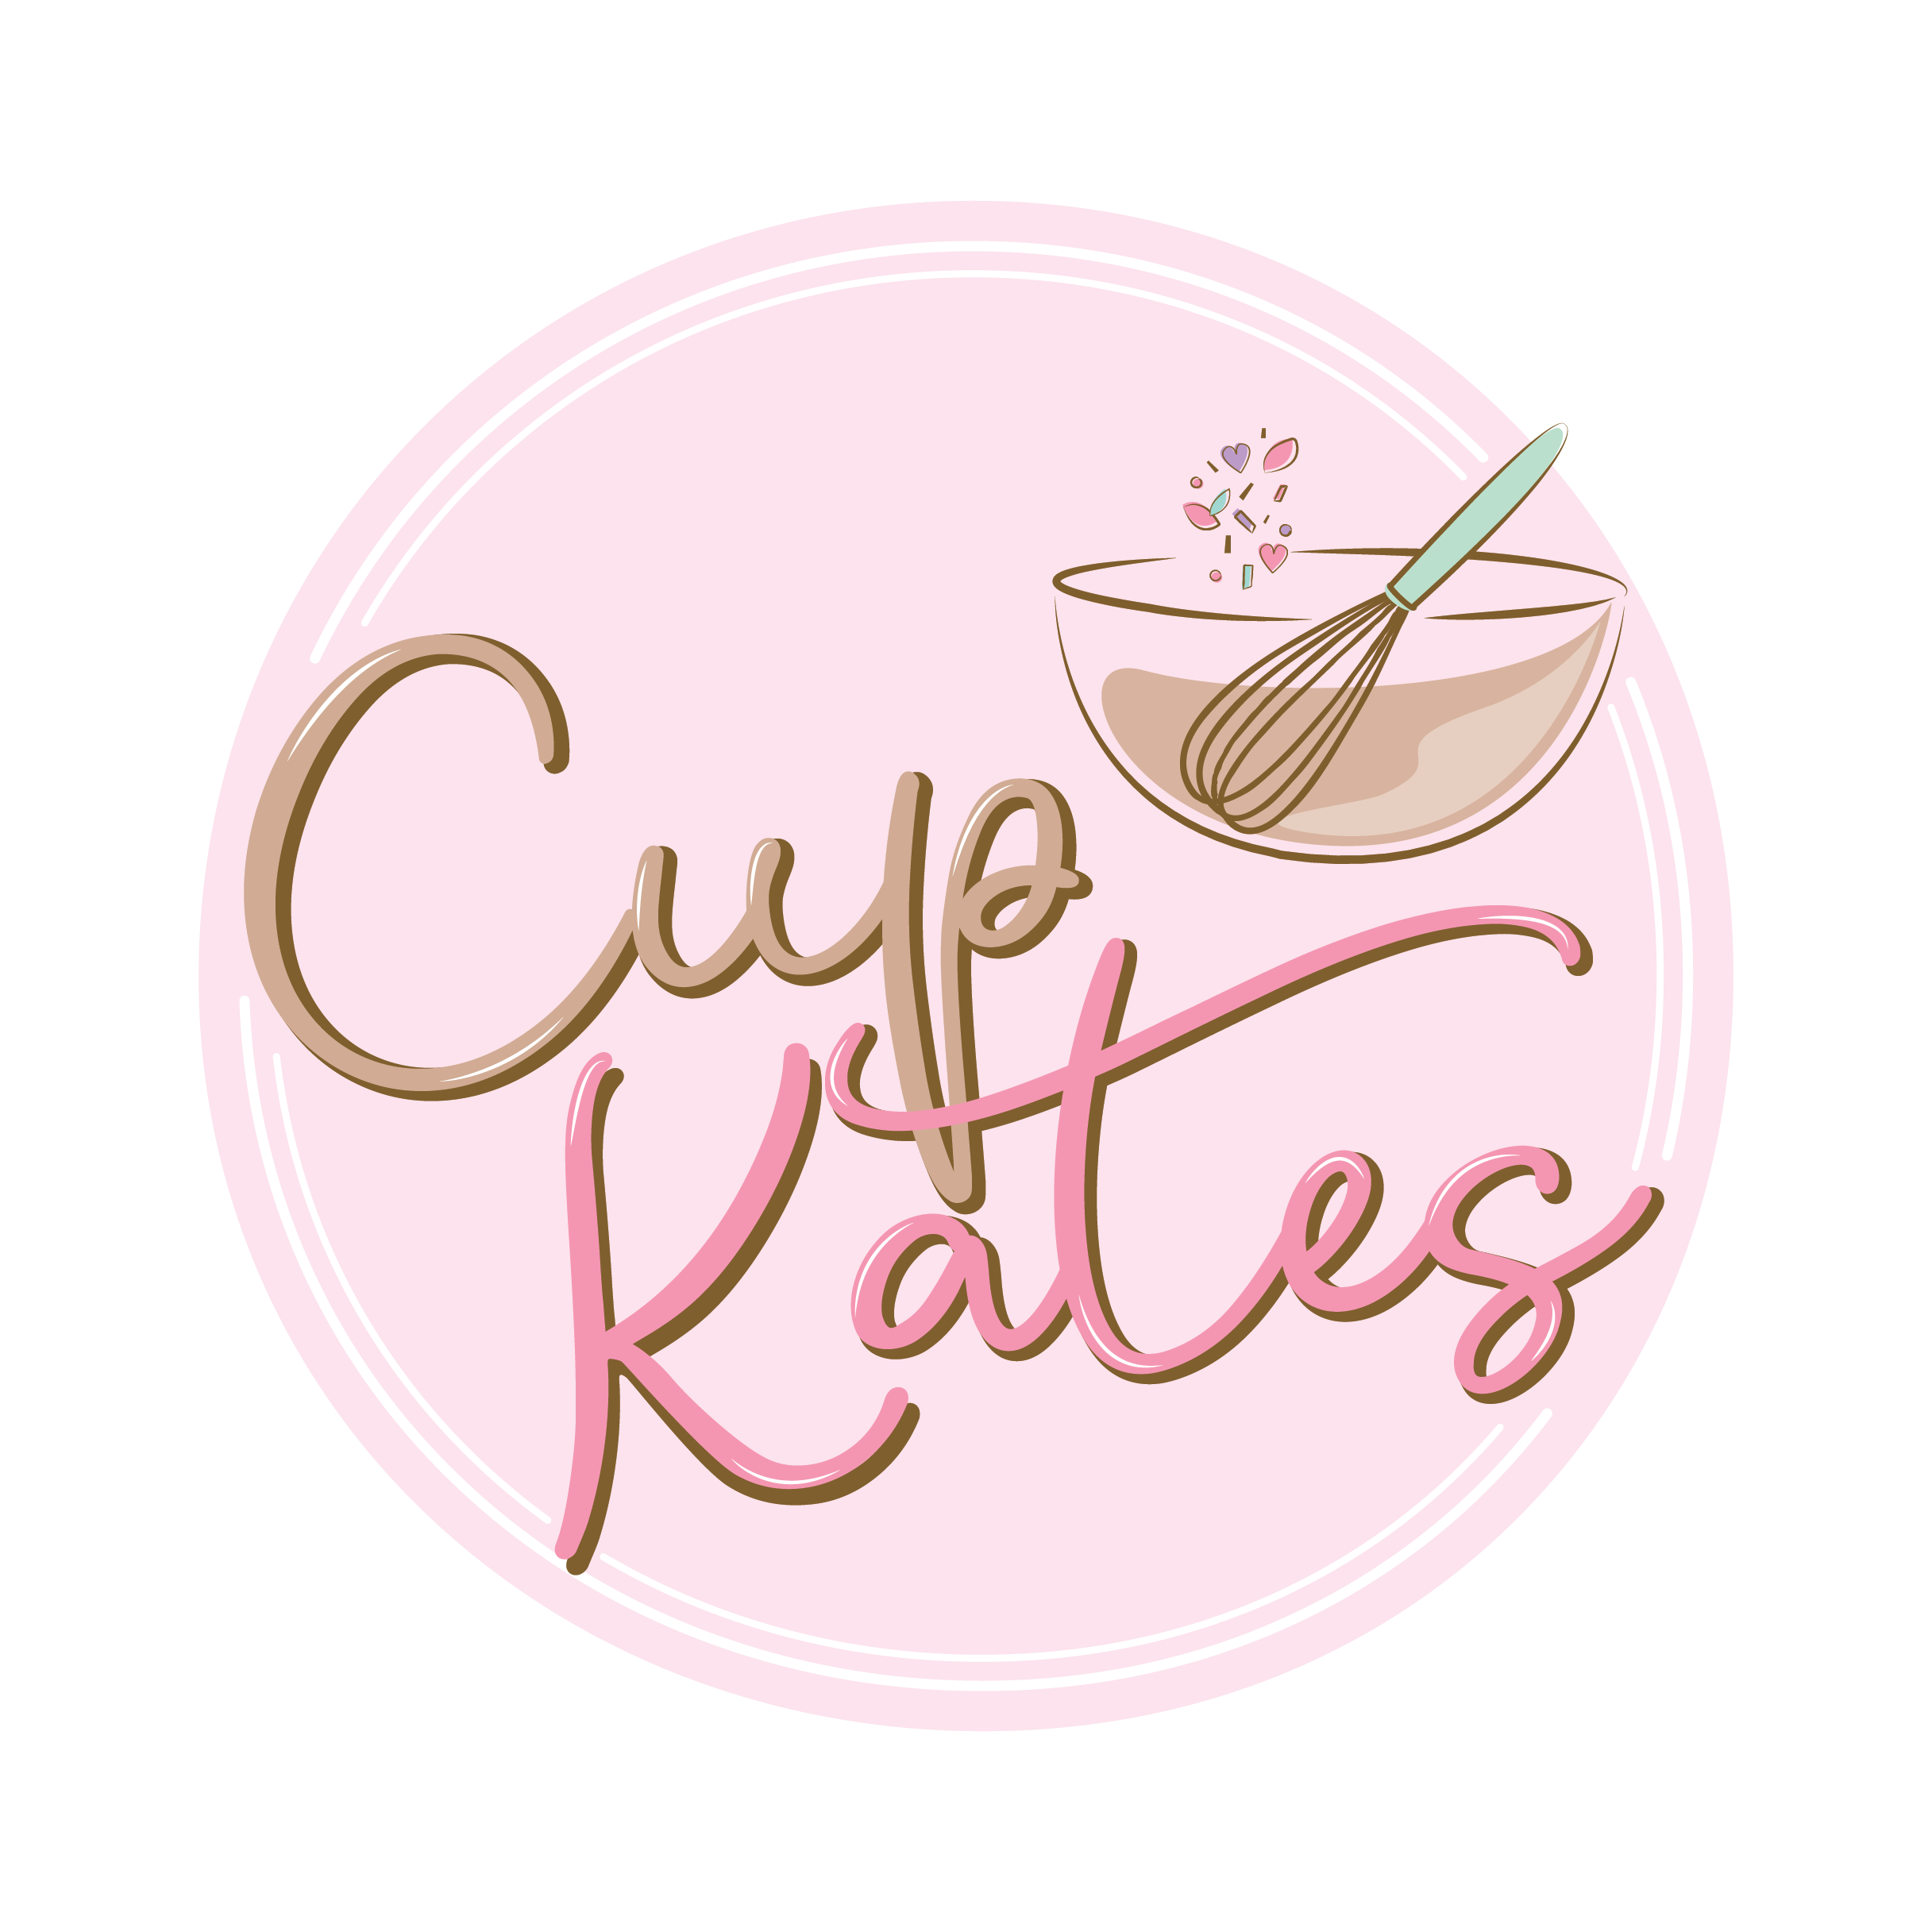 CupKates